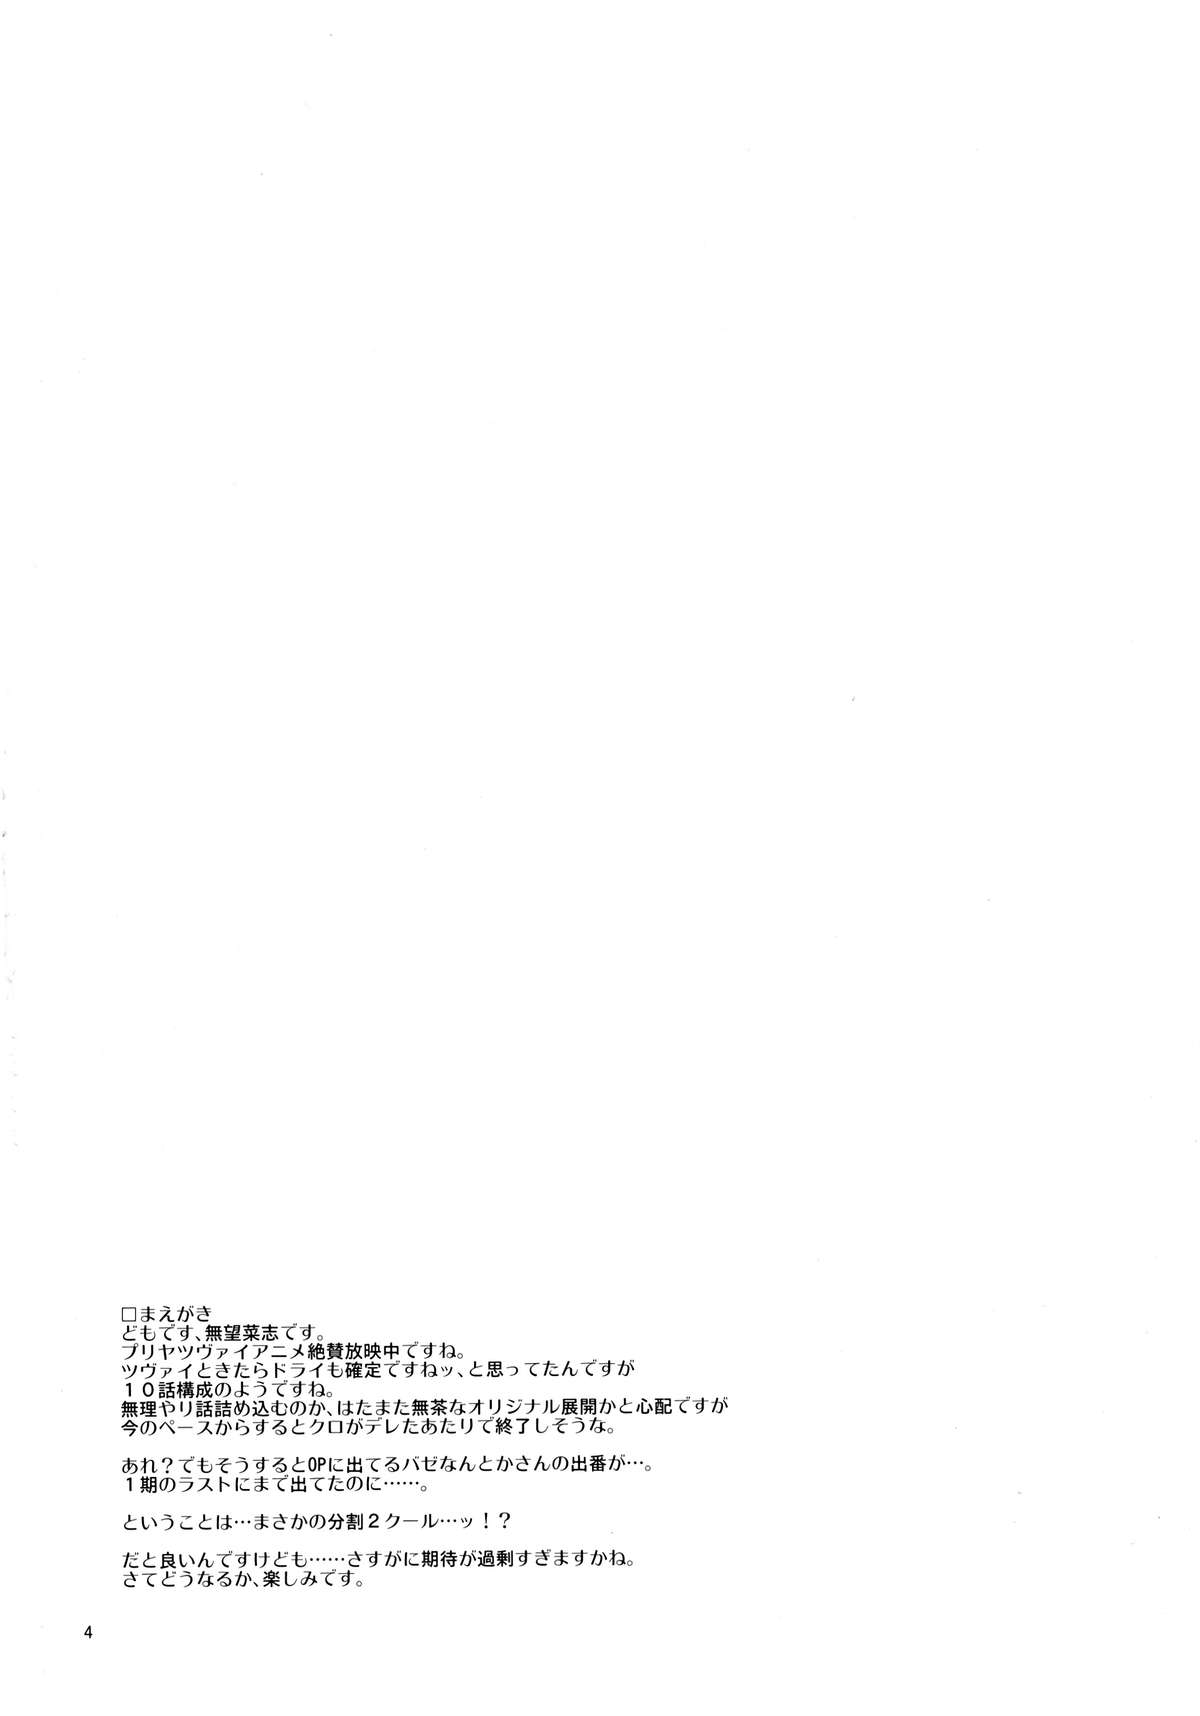 (C86) [RUBBISH選別隊 (無望菜志)] RE20 (Fate/kaleid liner プリズマ☆イリヤ) [中国翻訳]